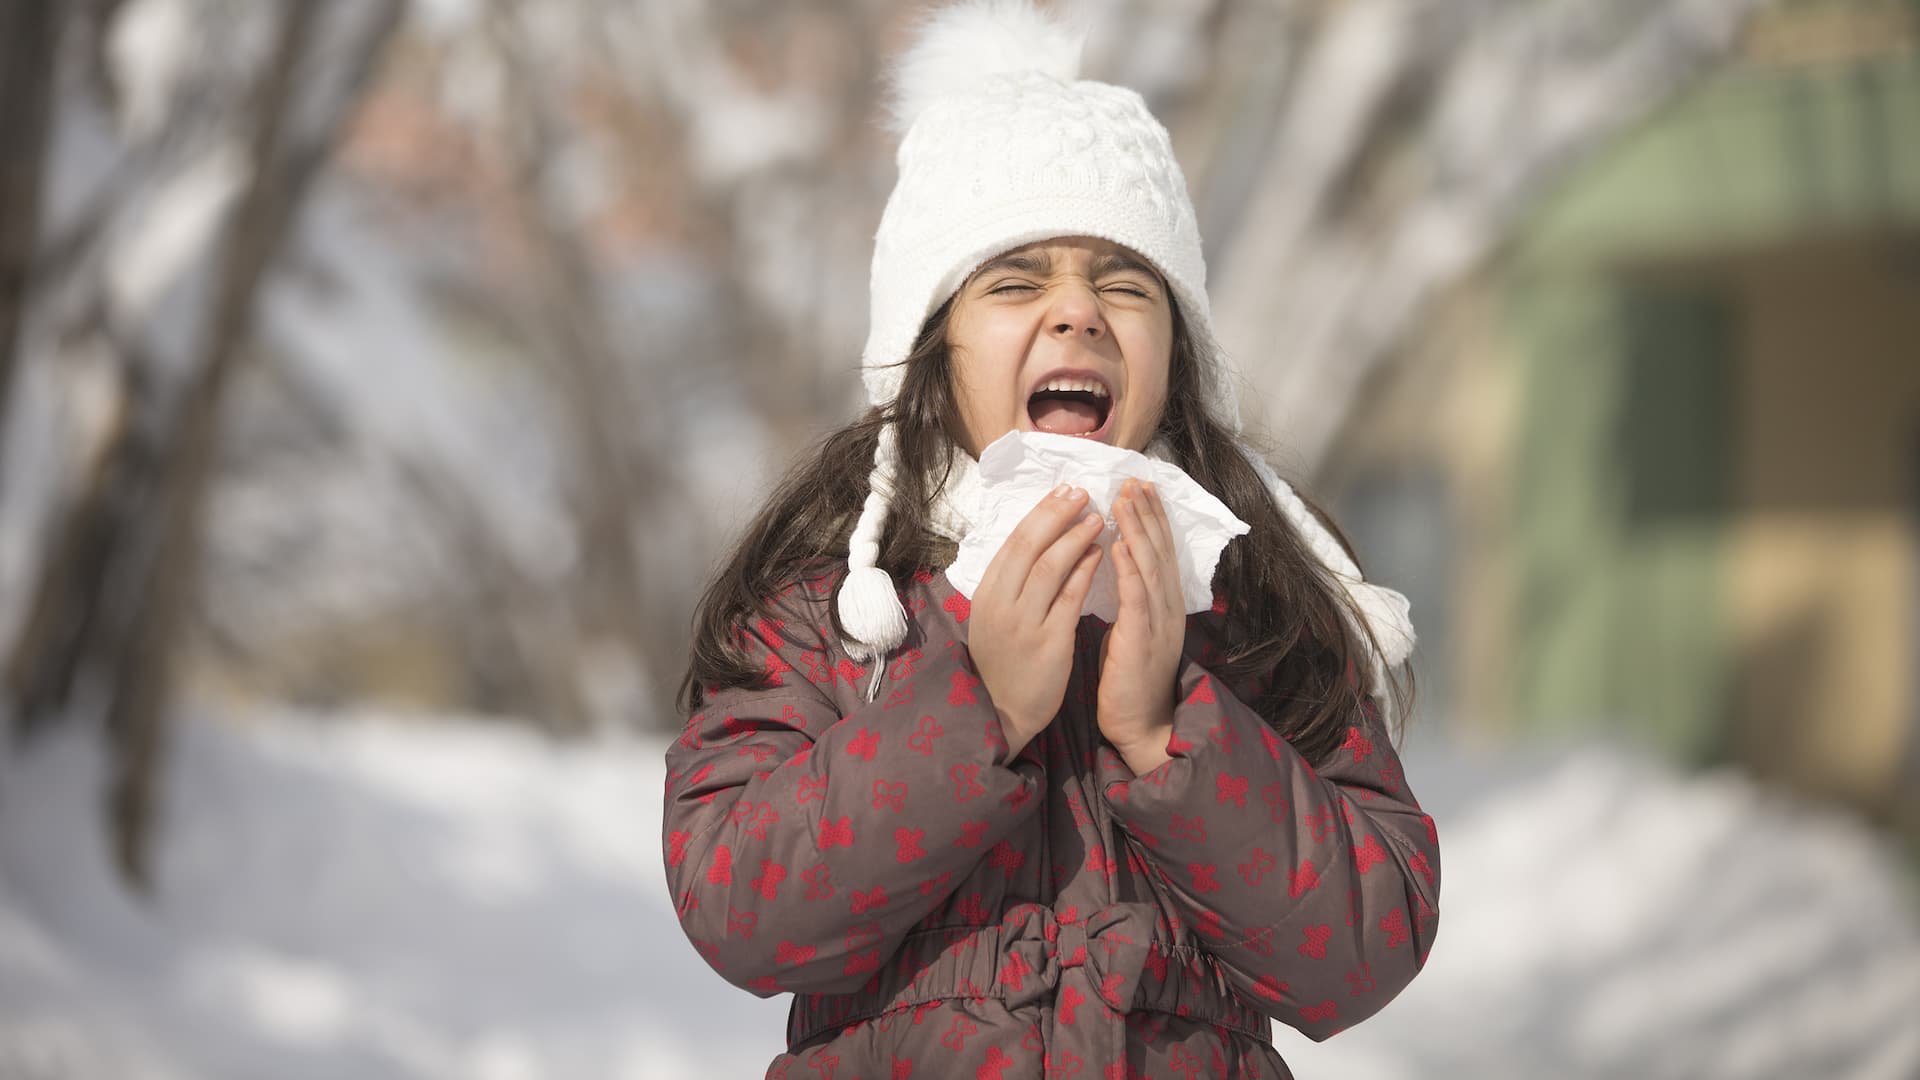 Teaching your kids sick weather health habits